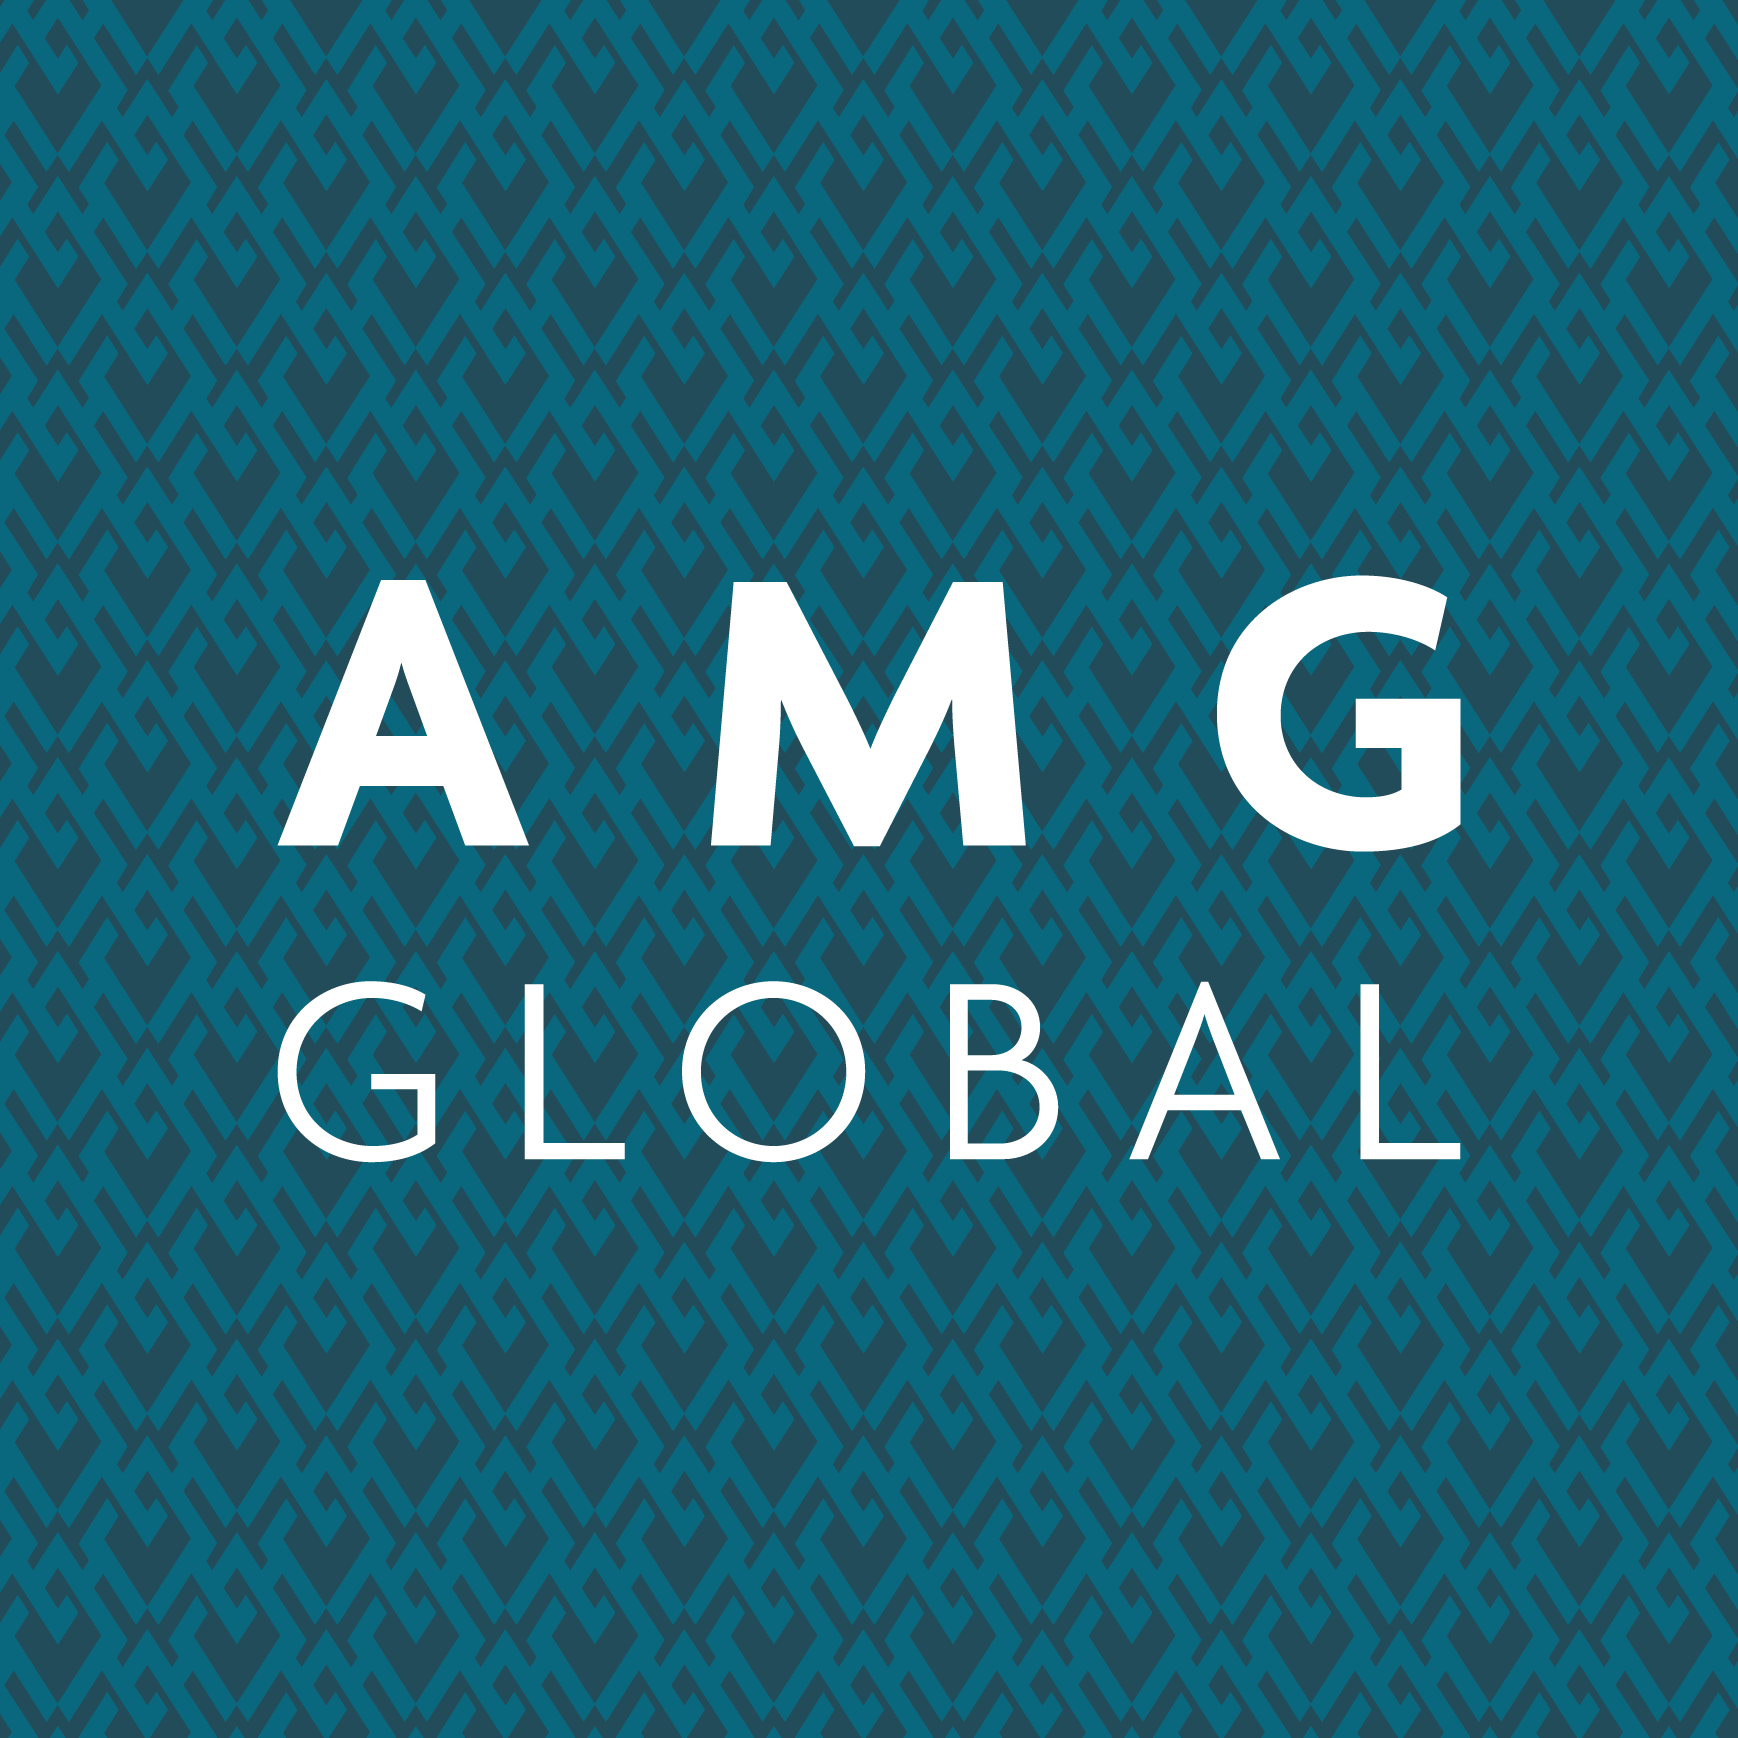 Club Image for AMG GLOBAL